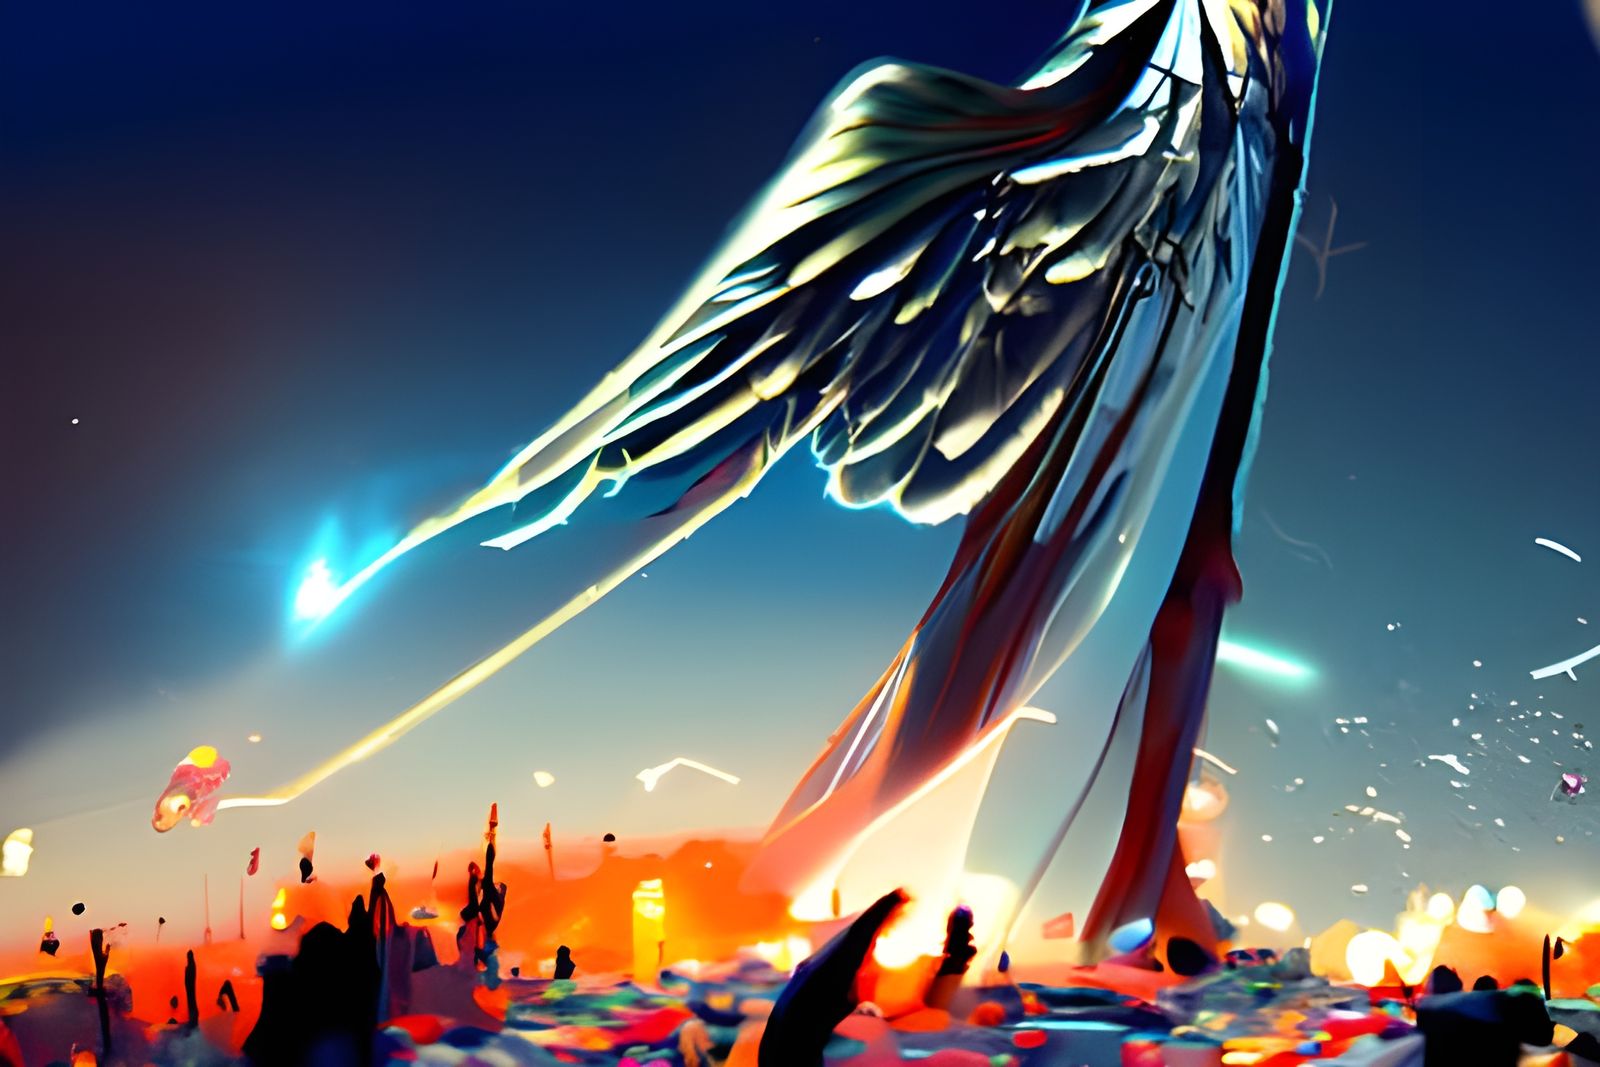 A big angel destroying the city